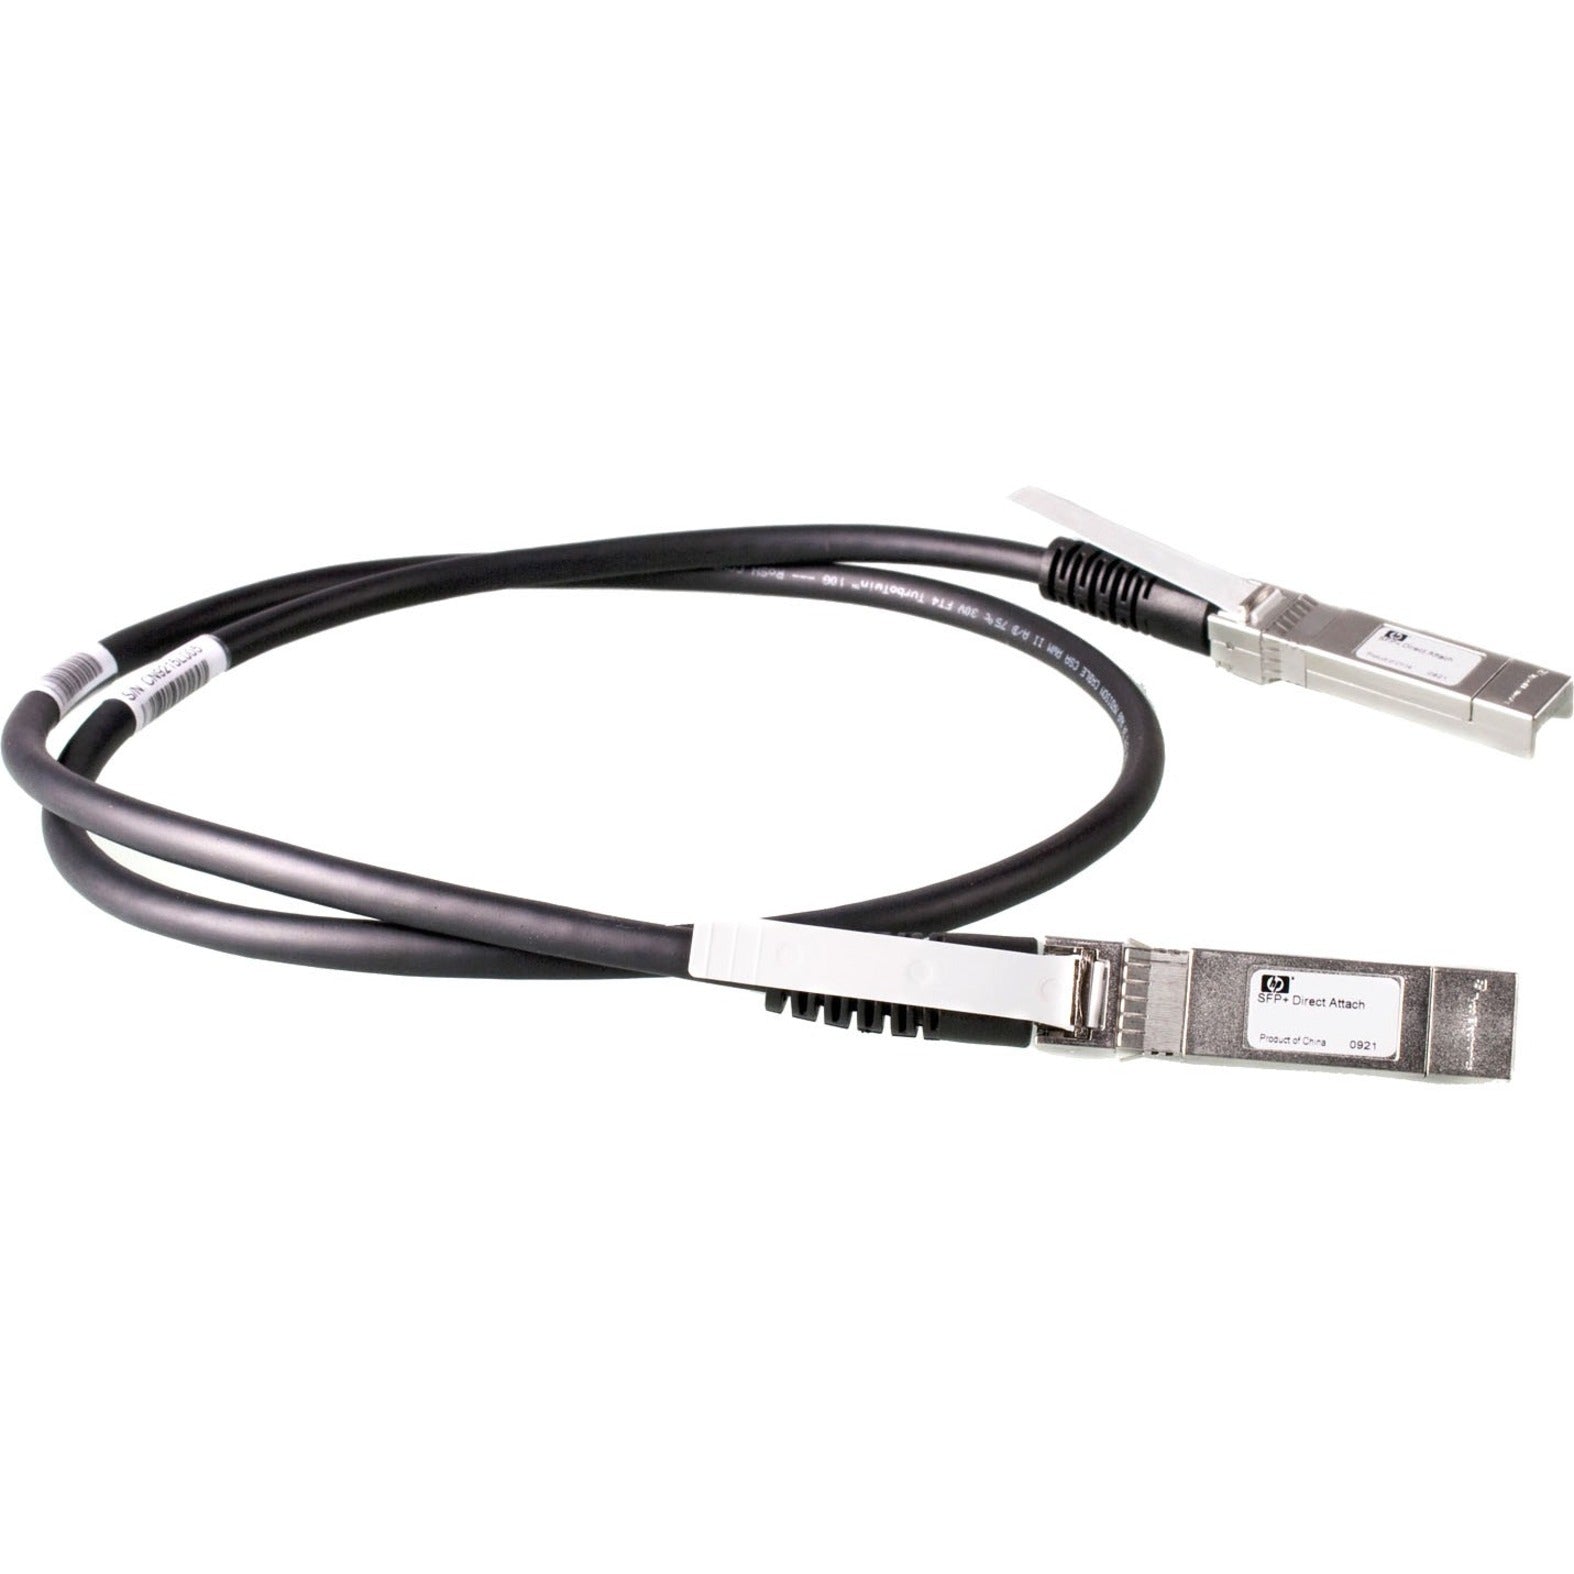 HPE E X240 10G SFP+ to SFP+ 1.2m Direct Attach Copper Cable (JD096C)